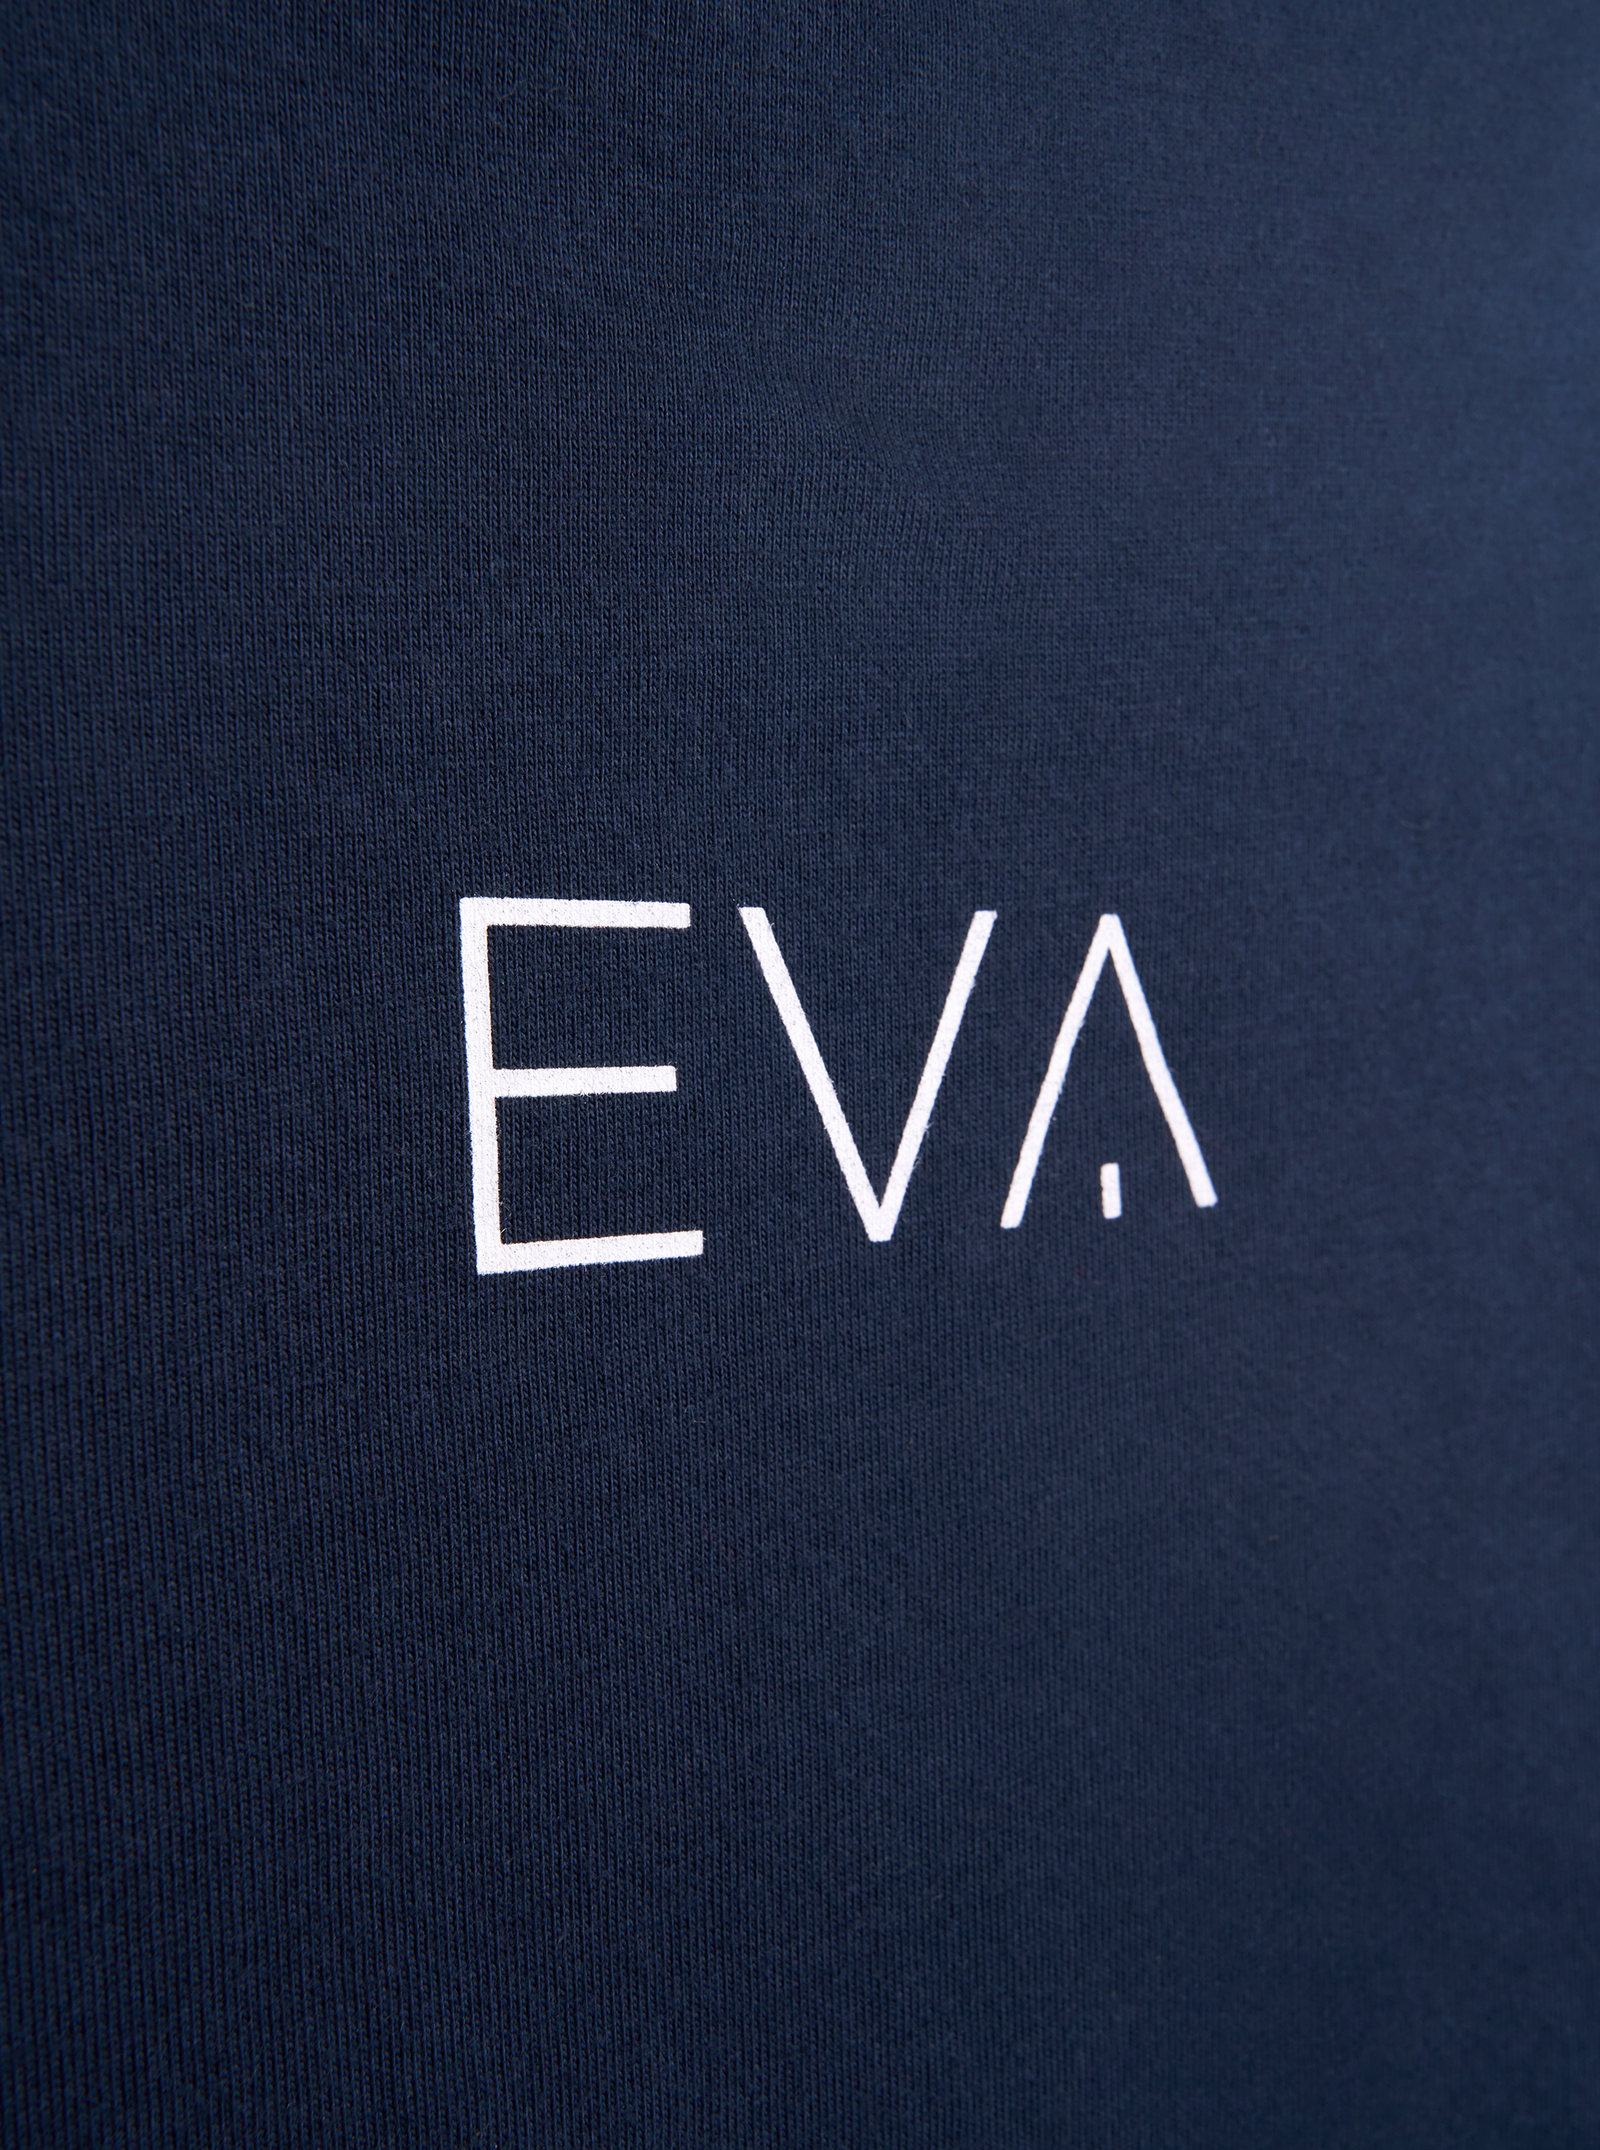 EVA Navy T-shirt